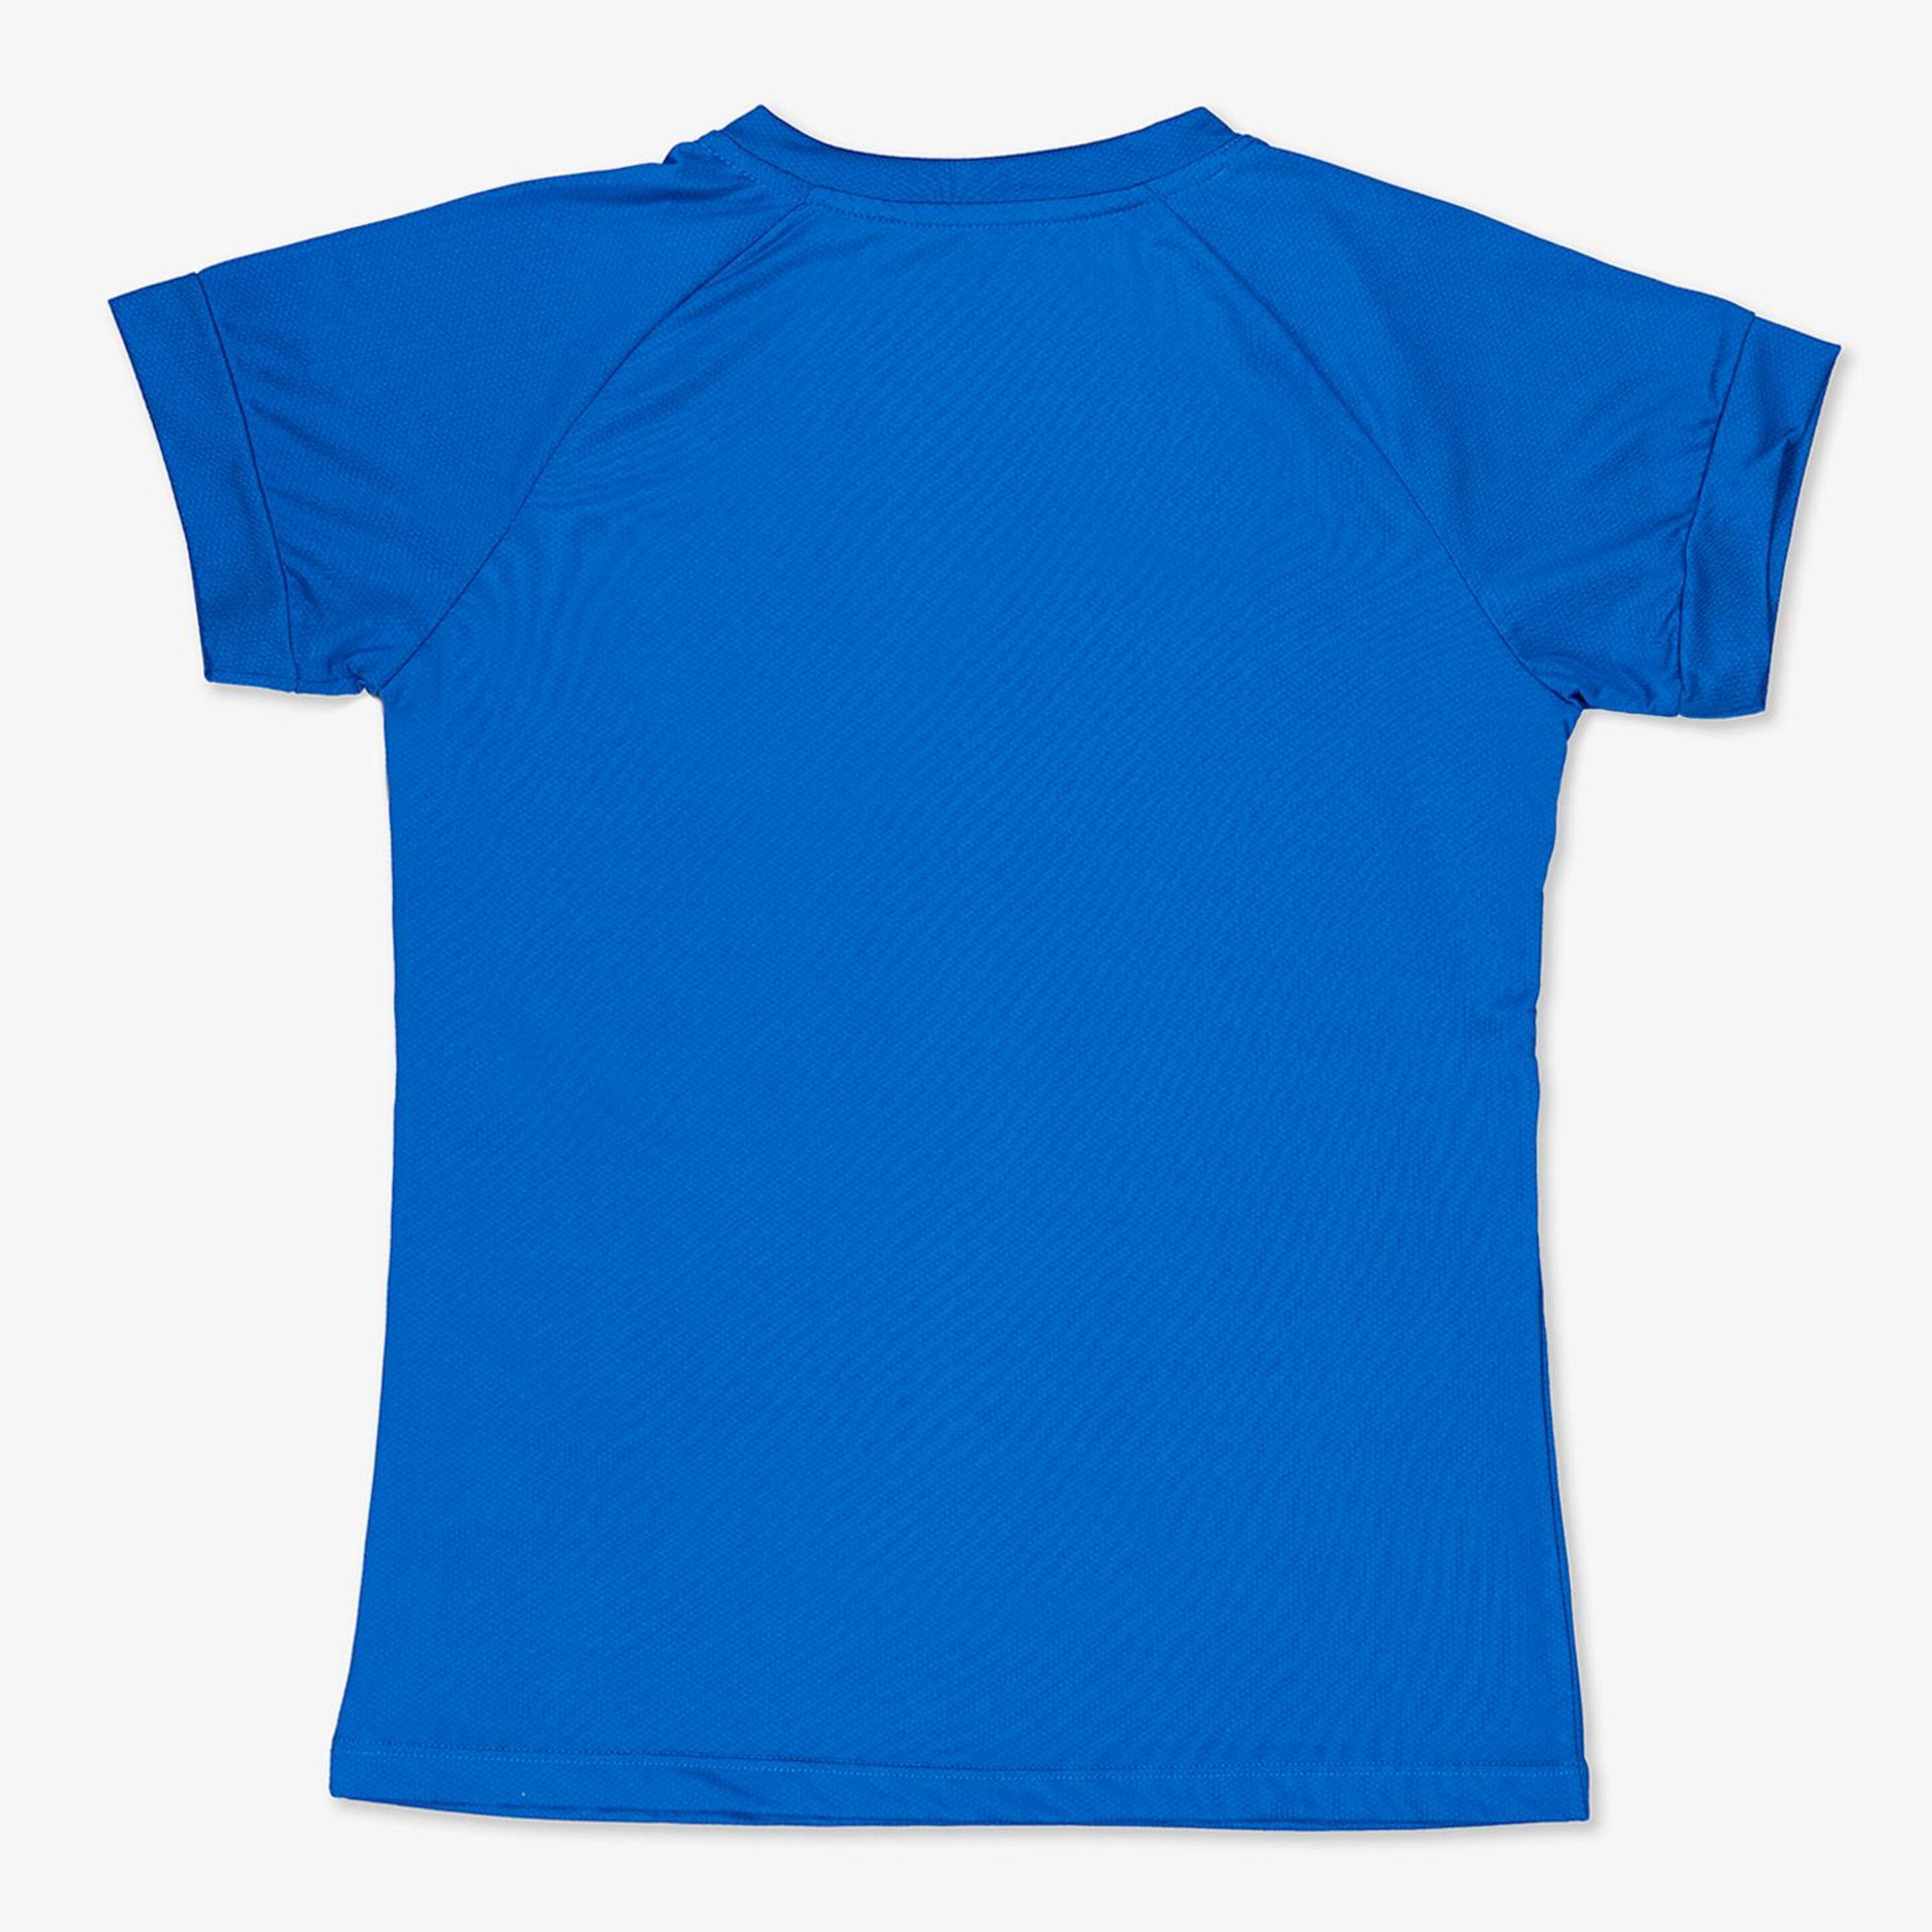 K-Swiss Core Team - Azul - Camiseta Tenis Niña